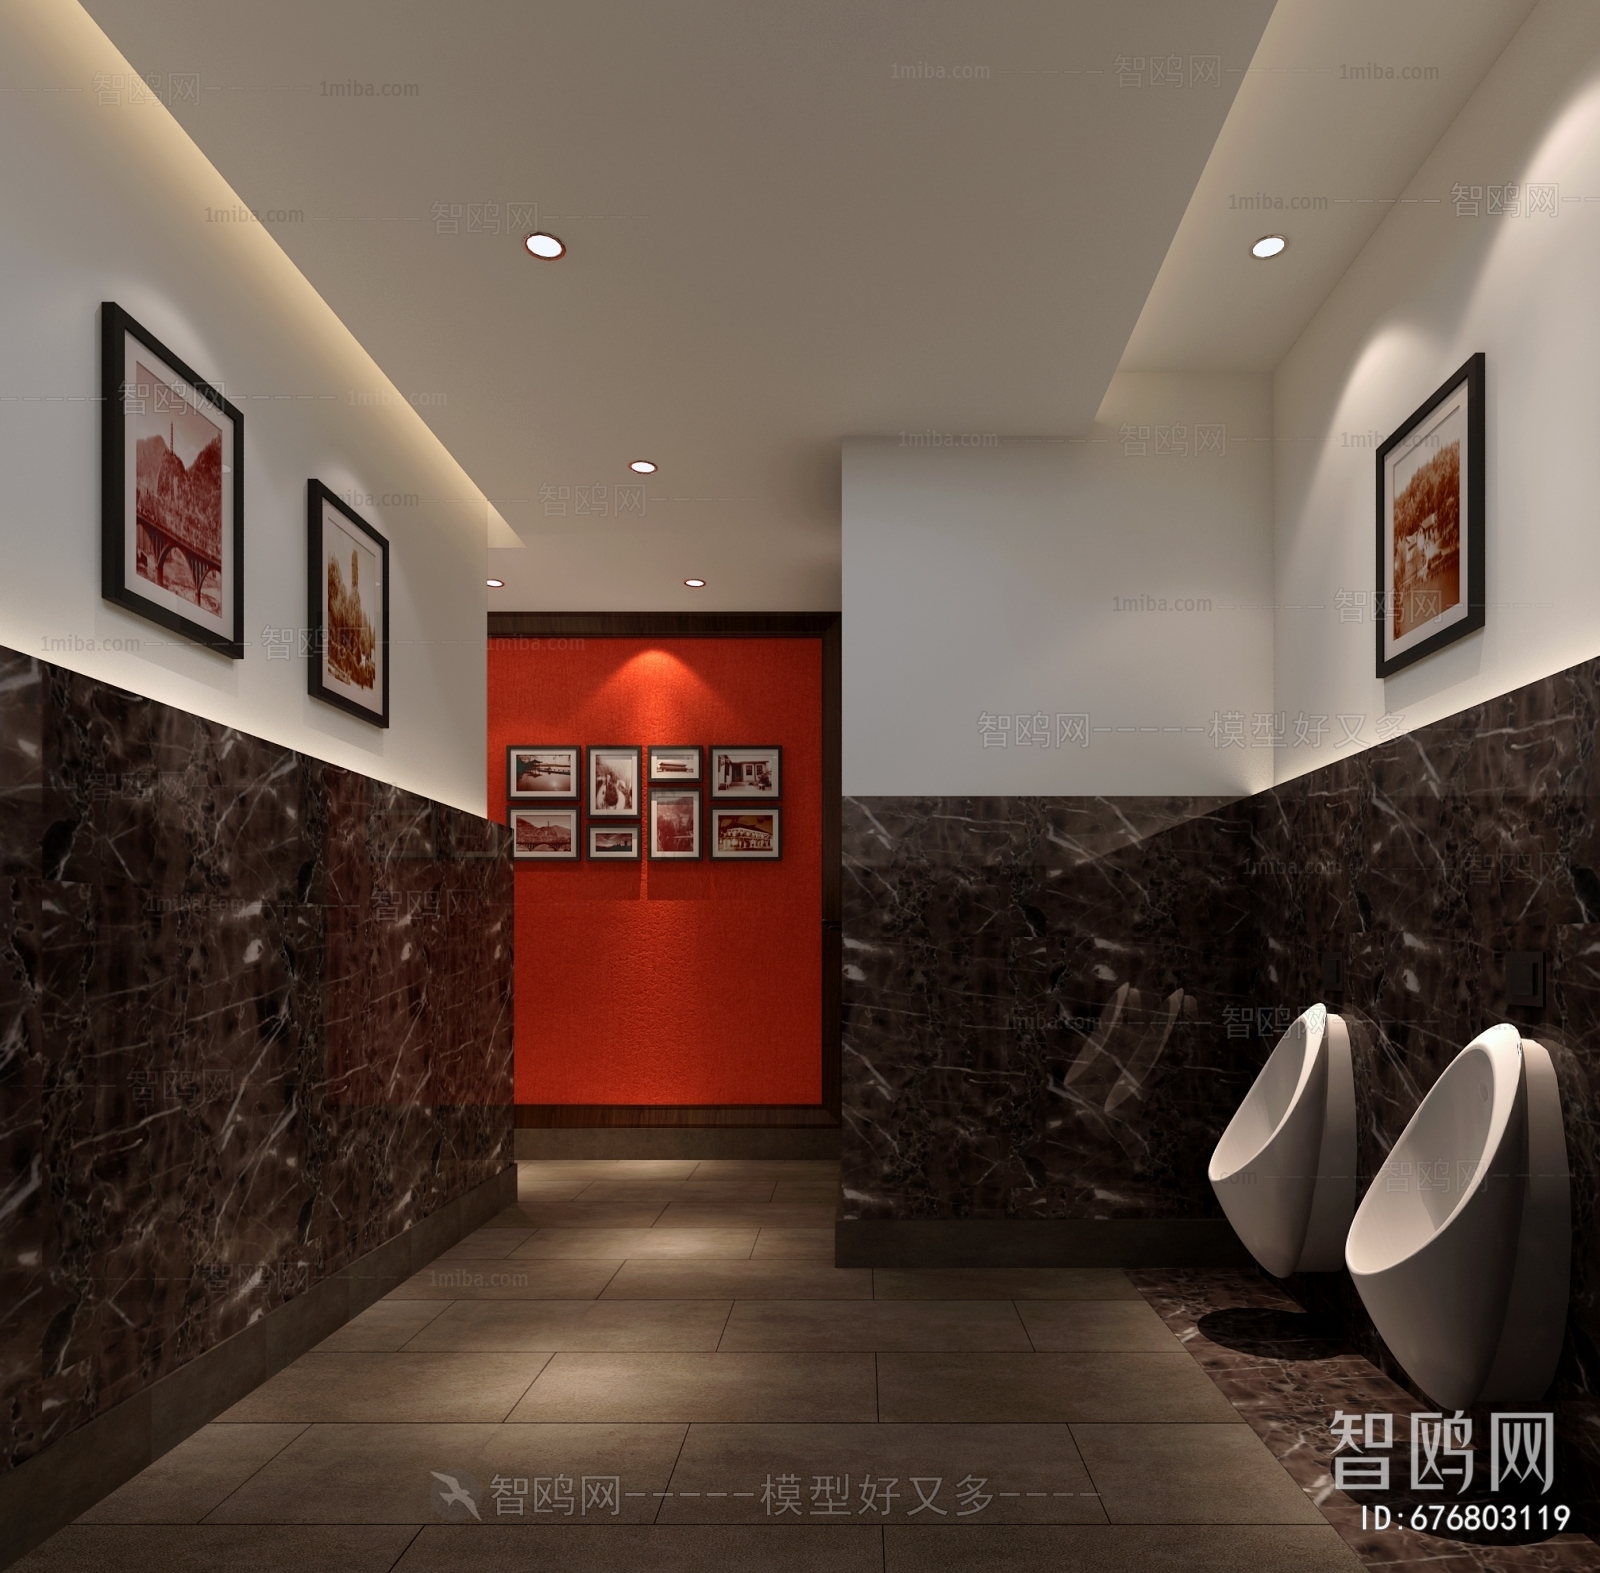 Chinese Style Public Toilet